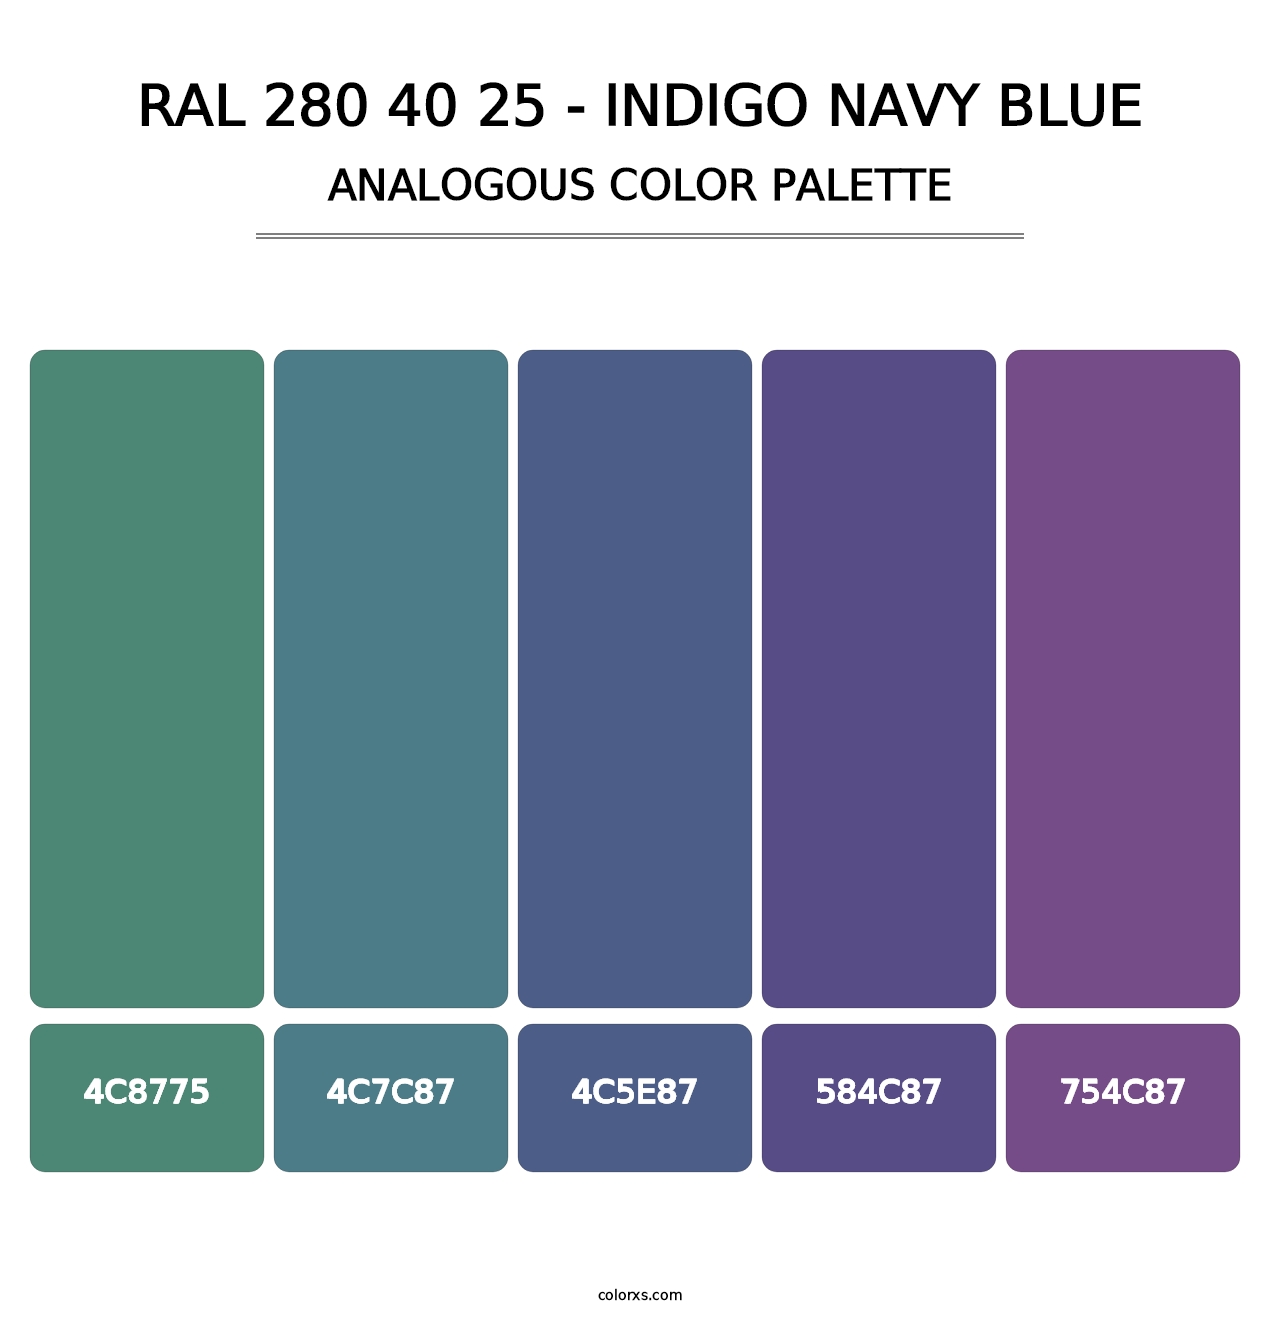 RAL 280 40 25 - Indigo Navy Blue - Analogous Color Palette